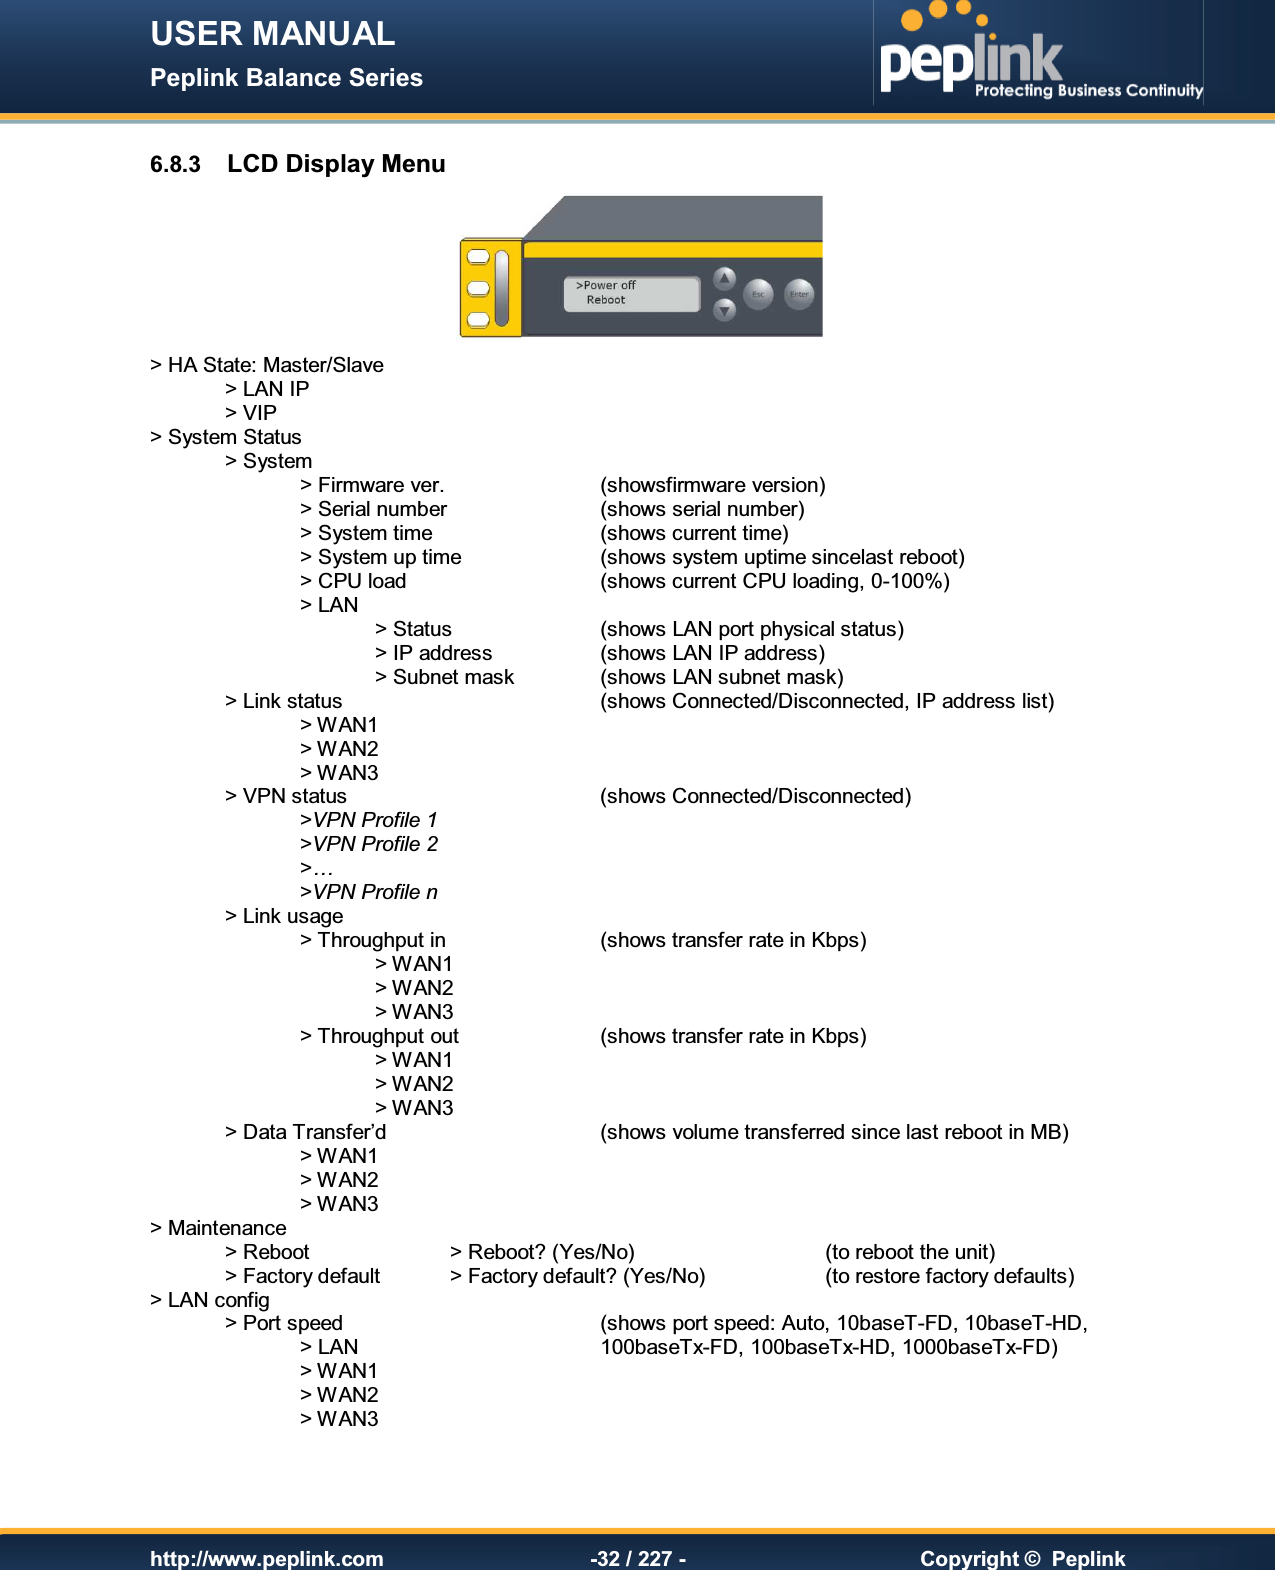 USER MANUAL Peplink Balance Series   http://www.peplink.com -32 / 227 -  Copyright ©  Peplink 6.8.3  LCD Display Menu  &gt; HA State: Master/Slave   &gt; LAN IP   &gt; VIP &gt; System Status     &gt; System         &gt; Firmware ver.     (showsfirmware version)     &gt; Serial number     (shows serial number)     &gt; System time      (shows current time)     &gt; System up time    (shows system uptime sincelast reboot)     &gt; CPU load      (shows current CPU loading, 0-100%)     &gt; LAN         &gt; Status    (shows LAN port physical status)       &gt; IP address    (shows LAN IP address)       &gt; Subnet mask    (shows LAN subnet mask)   &gt; Link status        (shows Connected/Disconnected, IP address list)     &gt; WAN1         &gt; WAN2     &gt; WAN3   &gt; VPN status        (shows Connected/Disconnected)     &gt;VPN Profile 1     &gt;VPN Profile 2     &gt;…     &gt;VPN Profile n   &gt; Link usage       &gt; Throughput in     (shows transfer rate in Kbps)       &gt; WAN1         &gt; WAN2       &gt; WAN3     &gt; Throughput out    (shows transfer rate in Kbps)       &gt; WAN1           &gt; WAN2       &gt; WAN3  &gt; Data Transfer’d      (shows volume transferred since last reboot in MB)     &gt; WAN1     &gt; WAN2     &gt; WAN3 &gt; Maintenance     &gt; Reboot    &gt; Reboot? (Yes/No)      (to reboot the unit)   &gt; Factory default  &gt; Factory default? (Yes/No)    (to restore factory defaults)  &gt; LAN config     &gt; Port speed        (shows port speed: Auto, 10baseT-FD, 10baseT-HD,     &gt; LAN        100baseTx-FD, 100baseTx-HD, 1000baseTx-FD)     &gt; WAN1           &gt; WAN2     &gt; WAN3  